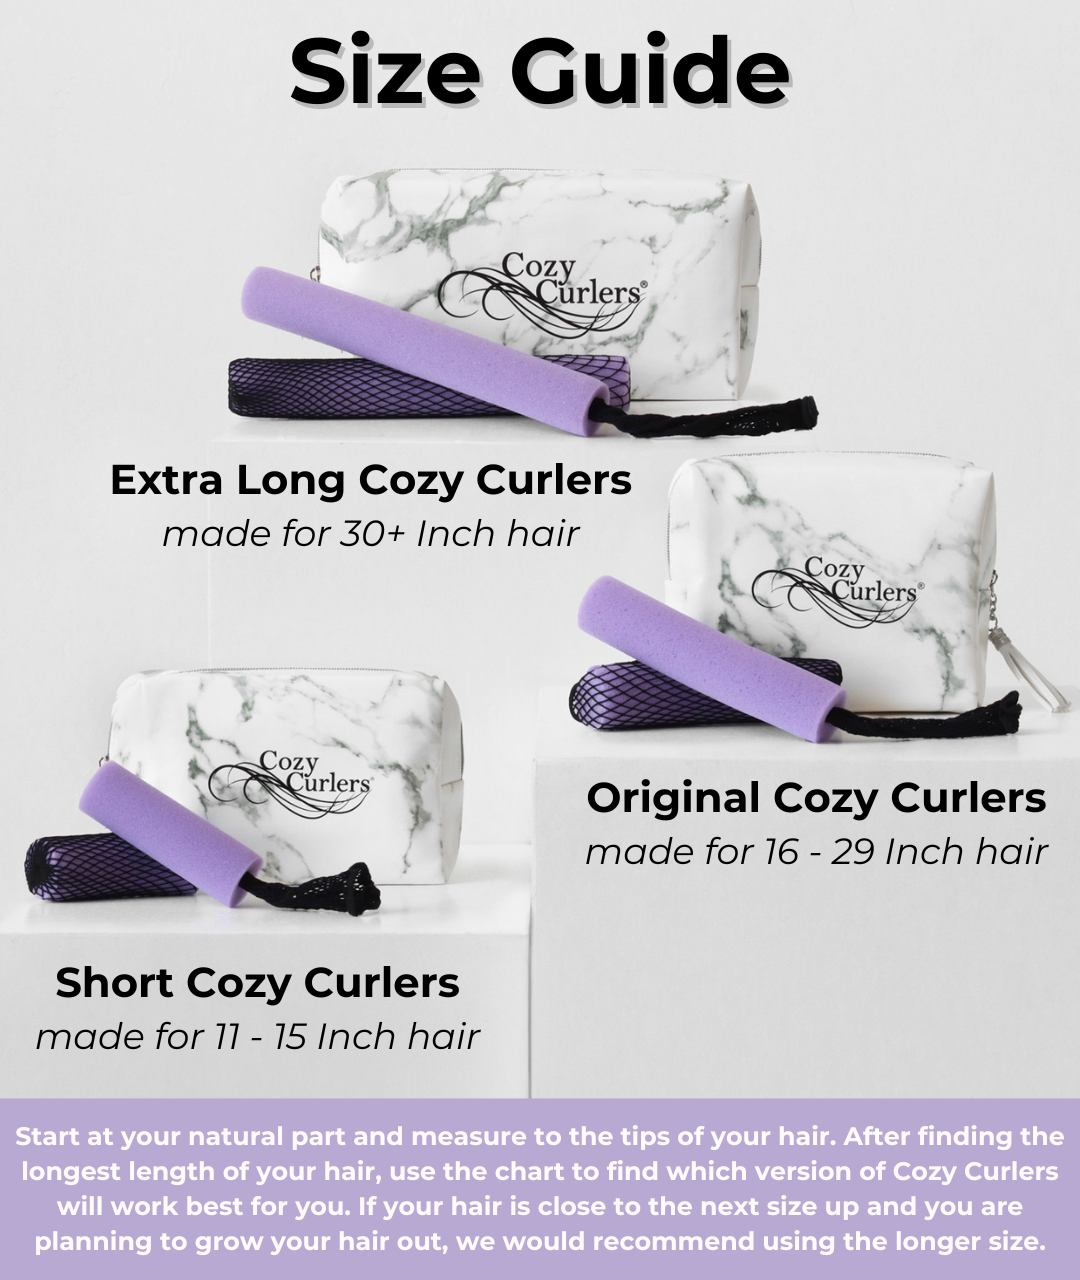 Short Cozy Curlers